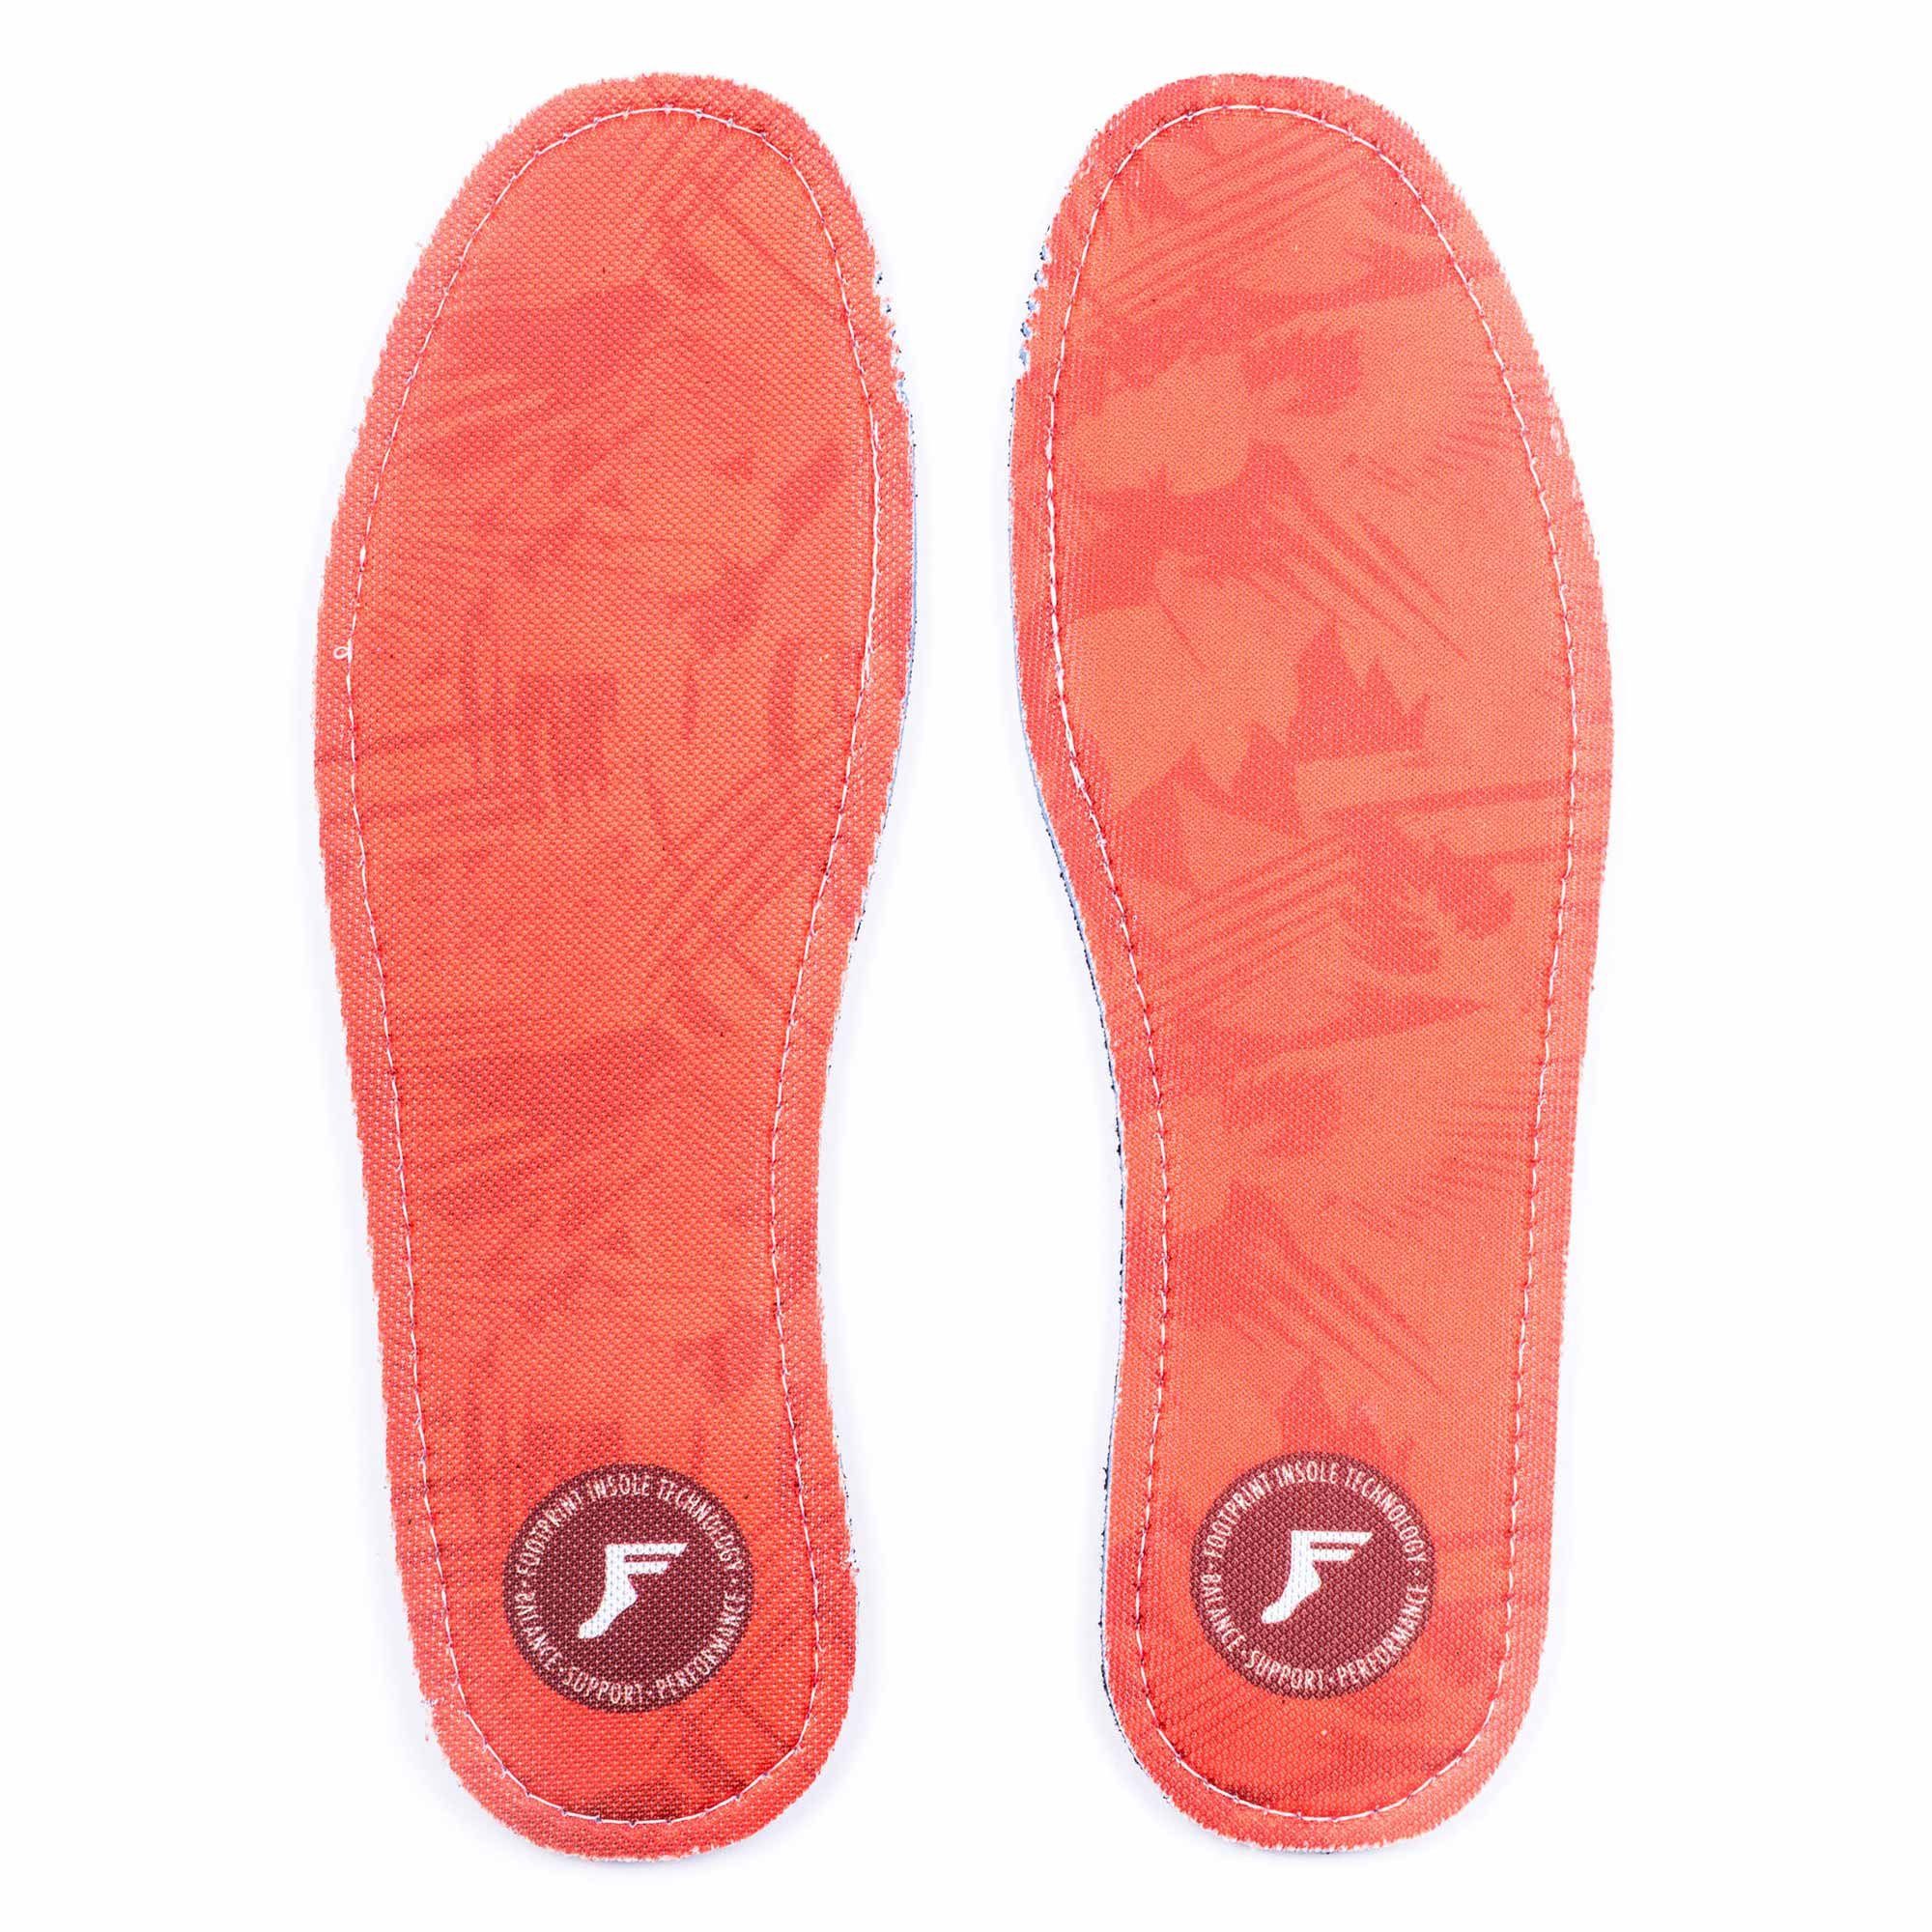 Footprint Insole Fuß- und Gelenkdämpfer Kingfoam Flat - 5mm Profile (red/camo) (1 Paar)